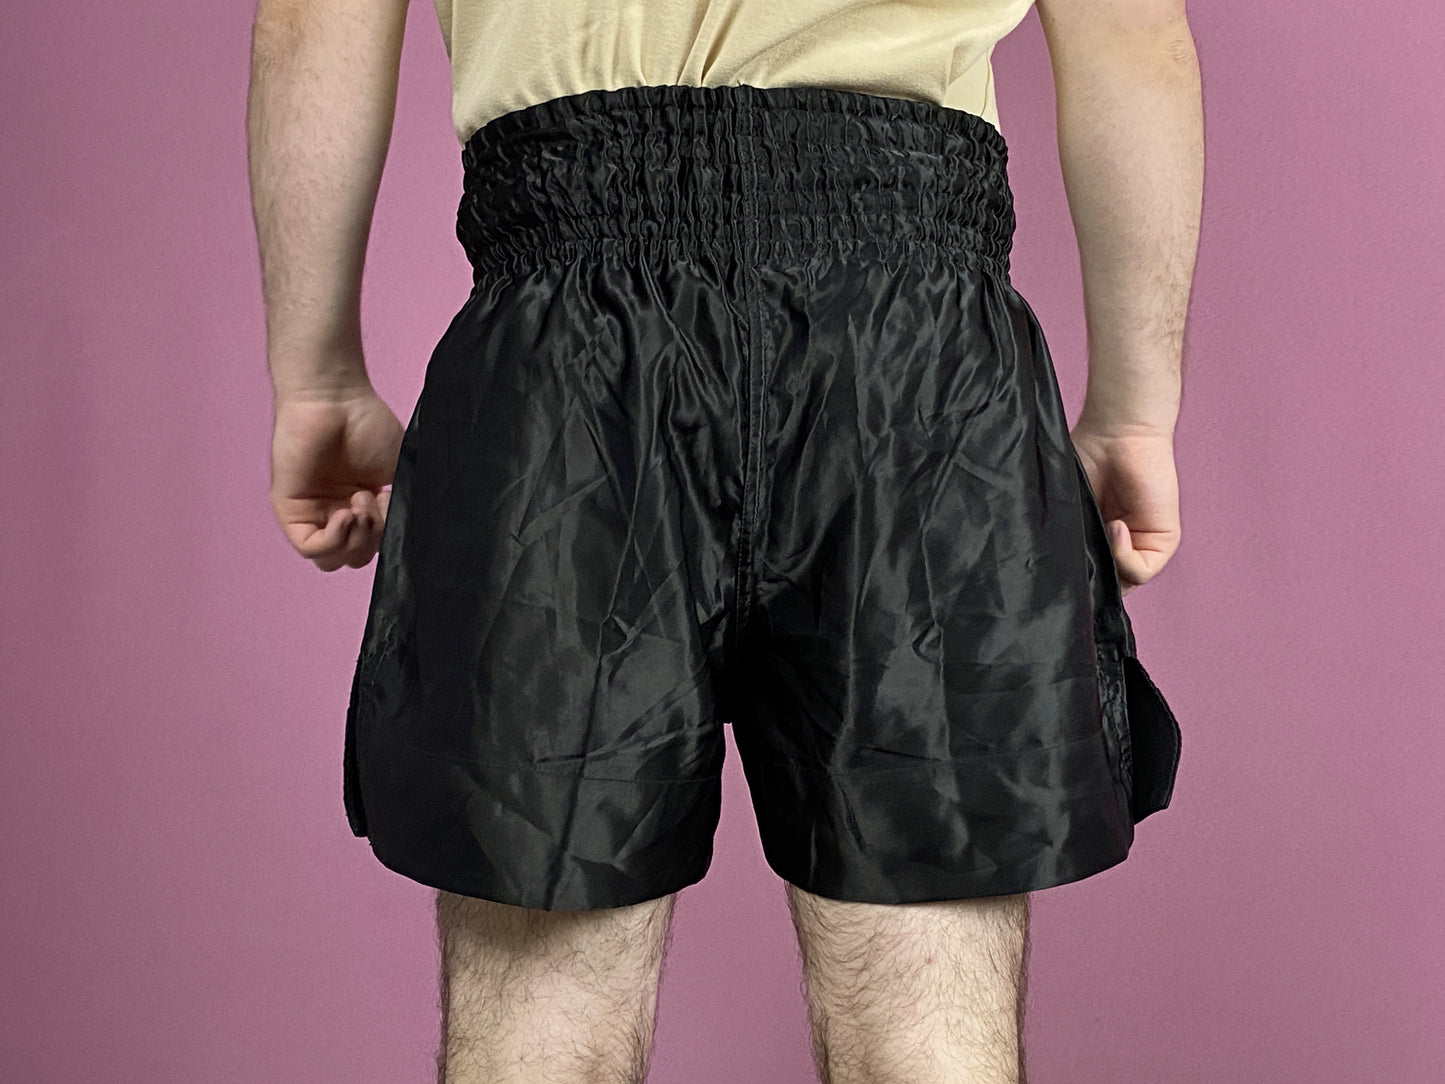 XPRT Vintage Men's Boxing Shorts - Large Black Polyester